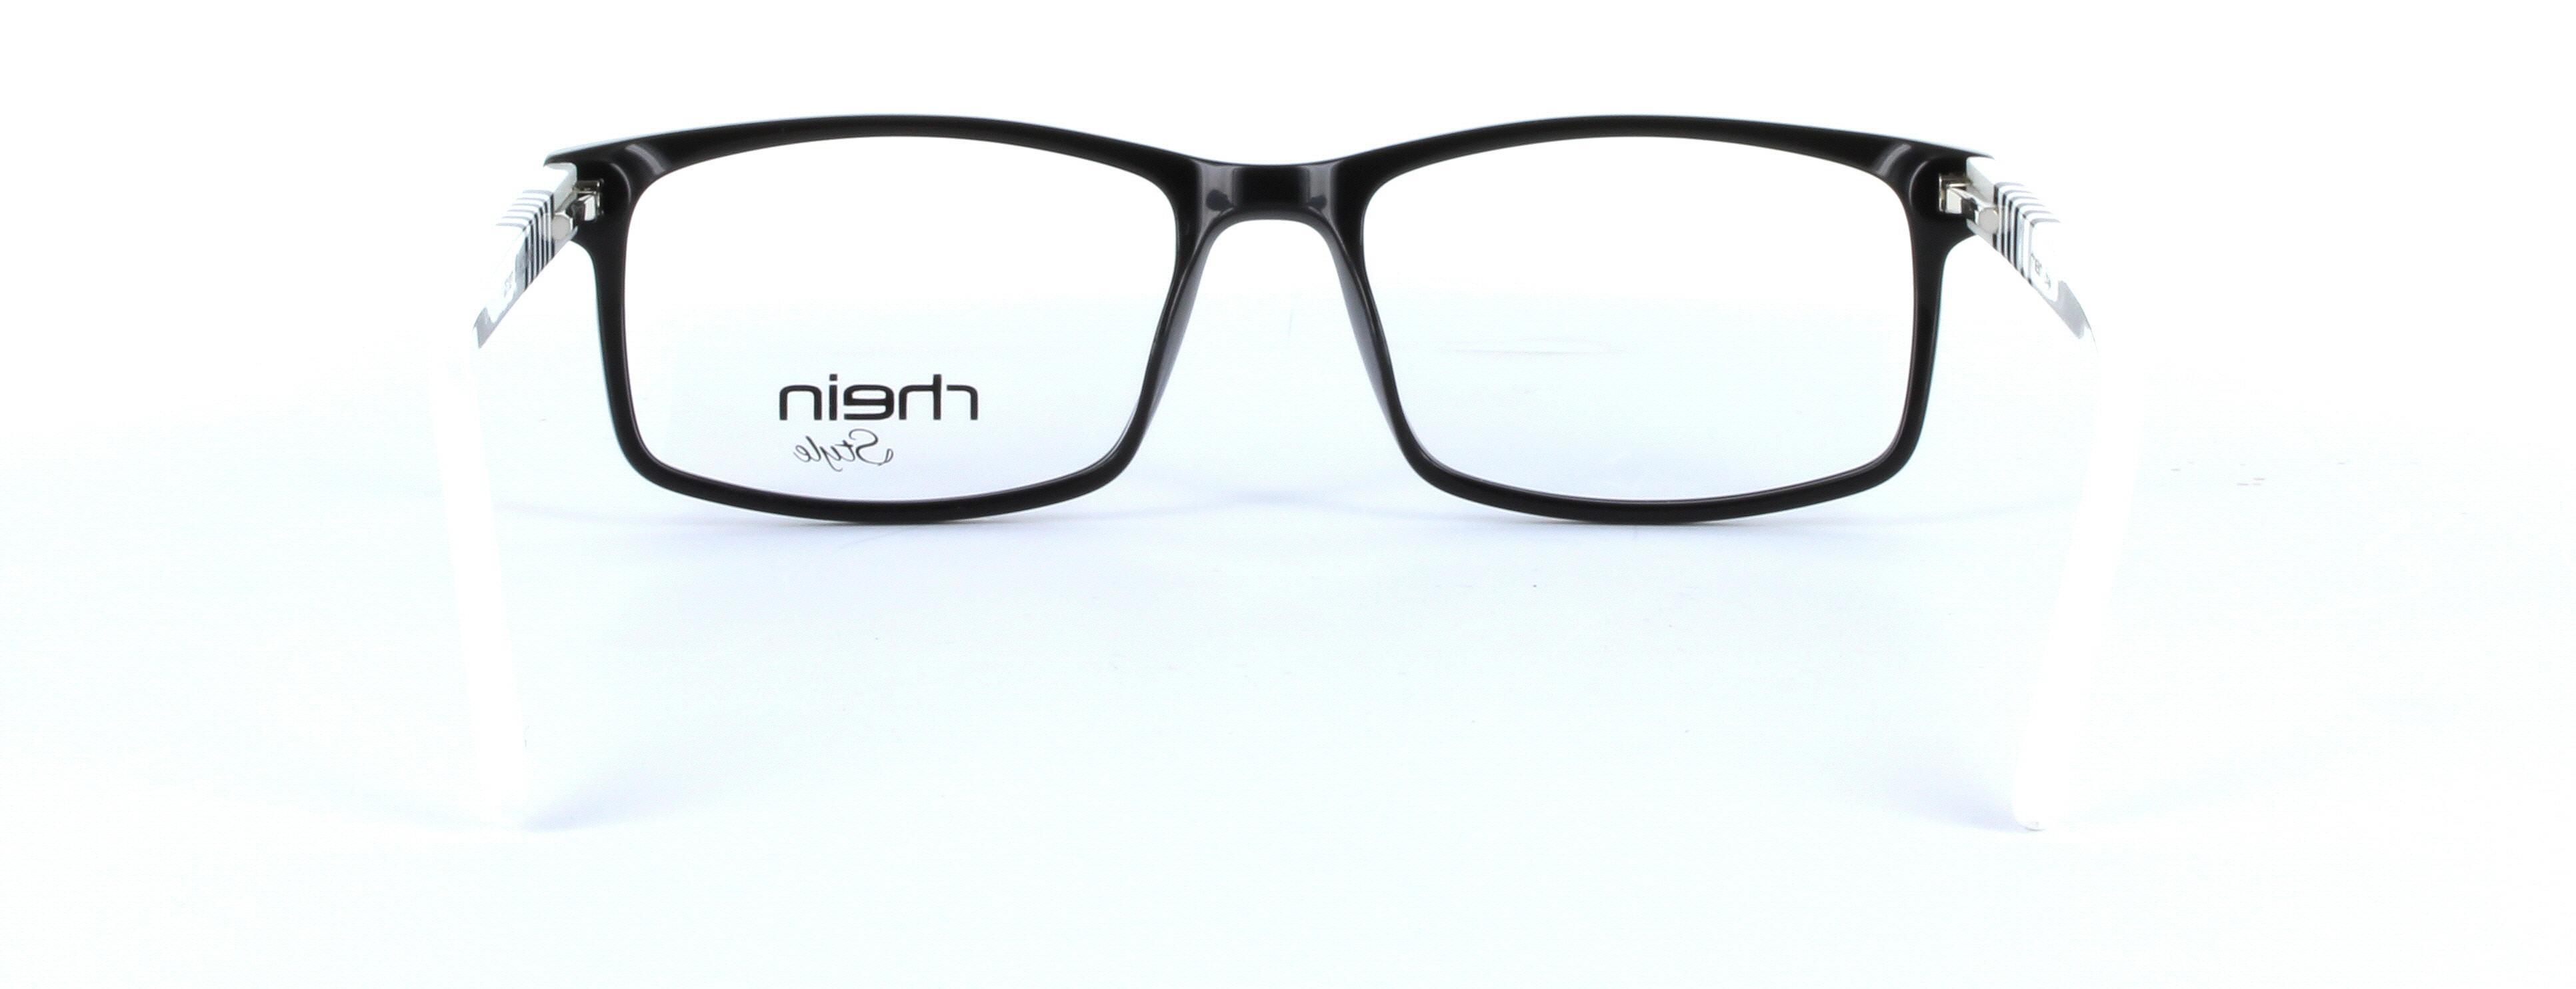 Binka Black Full Rim Rectangular Plastic Glasses - Image View 3